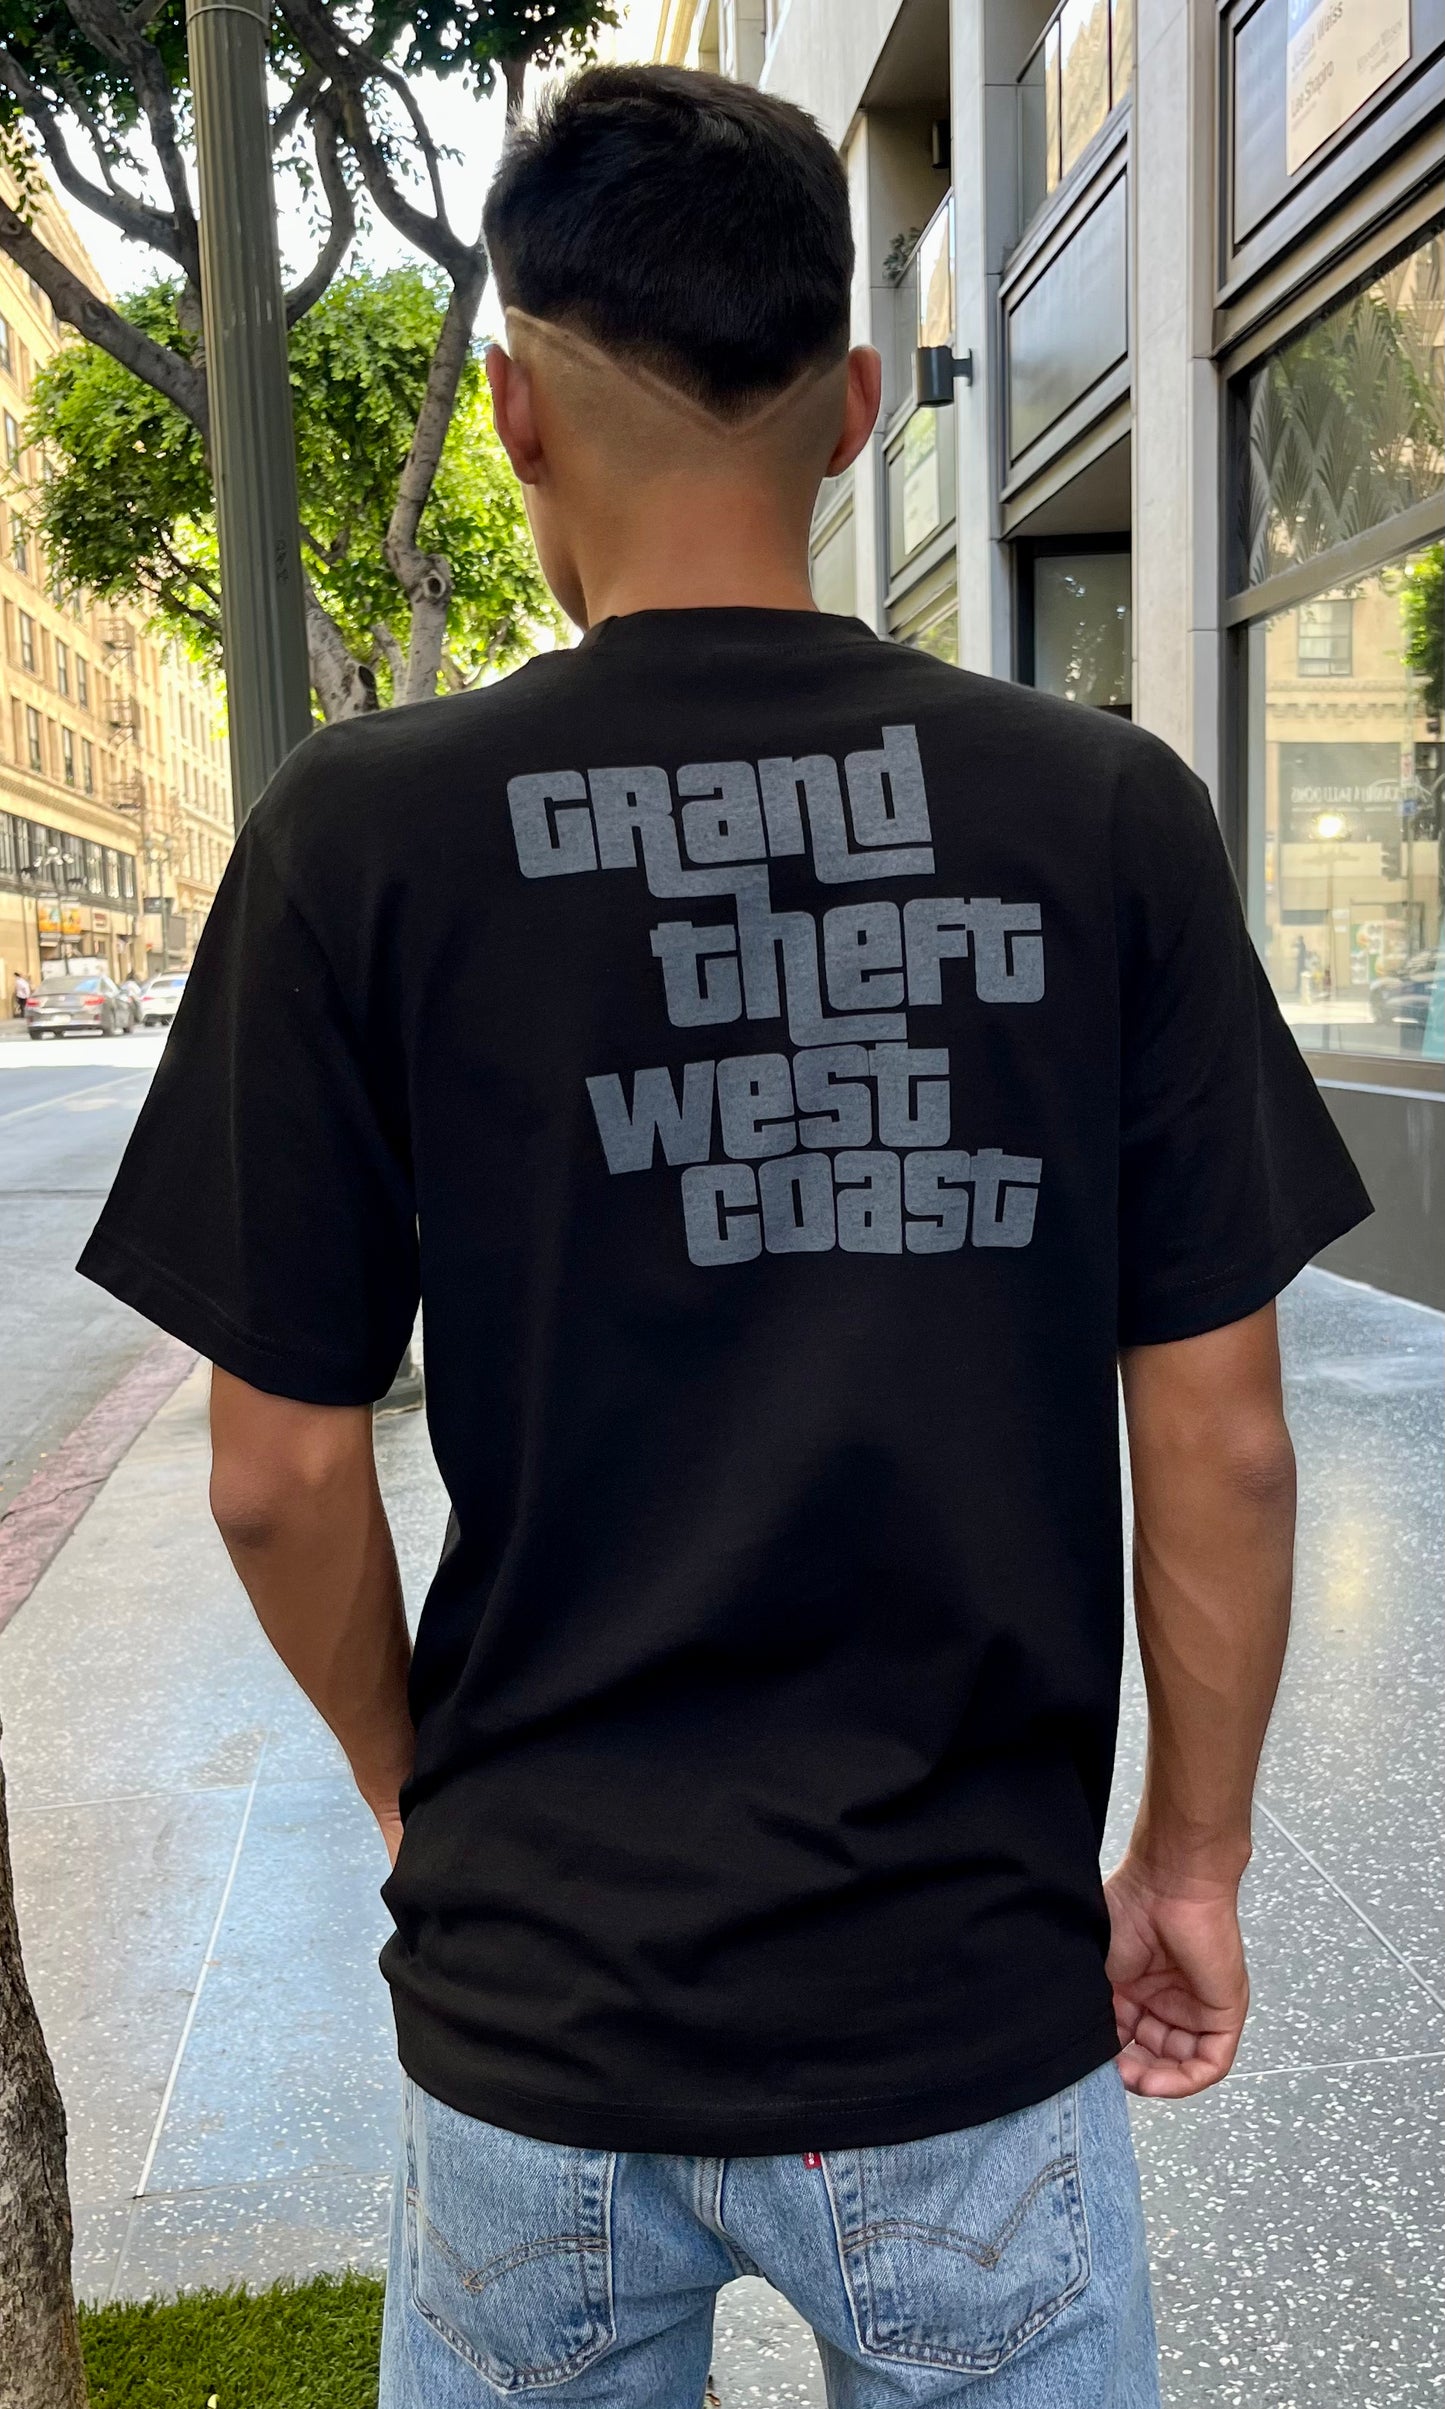 Grand Theft West Coast Legends Heavyweight Graphic T-shirt